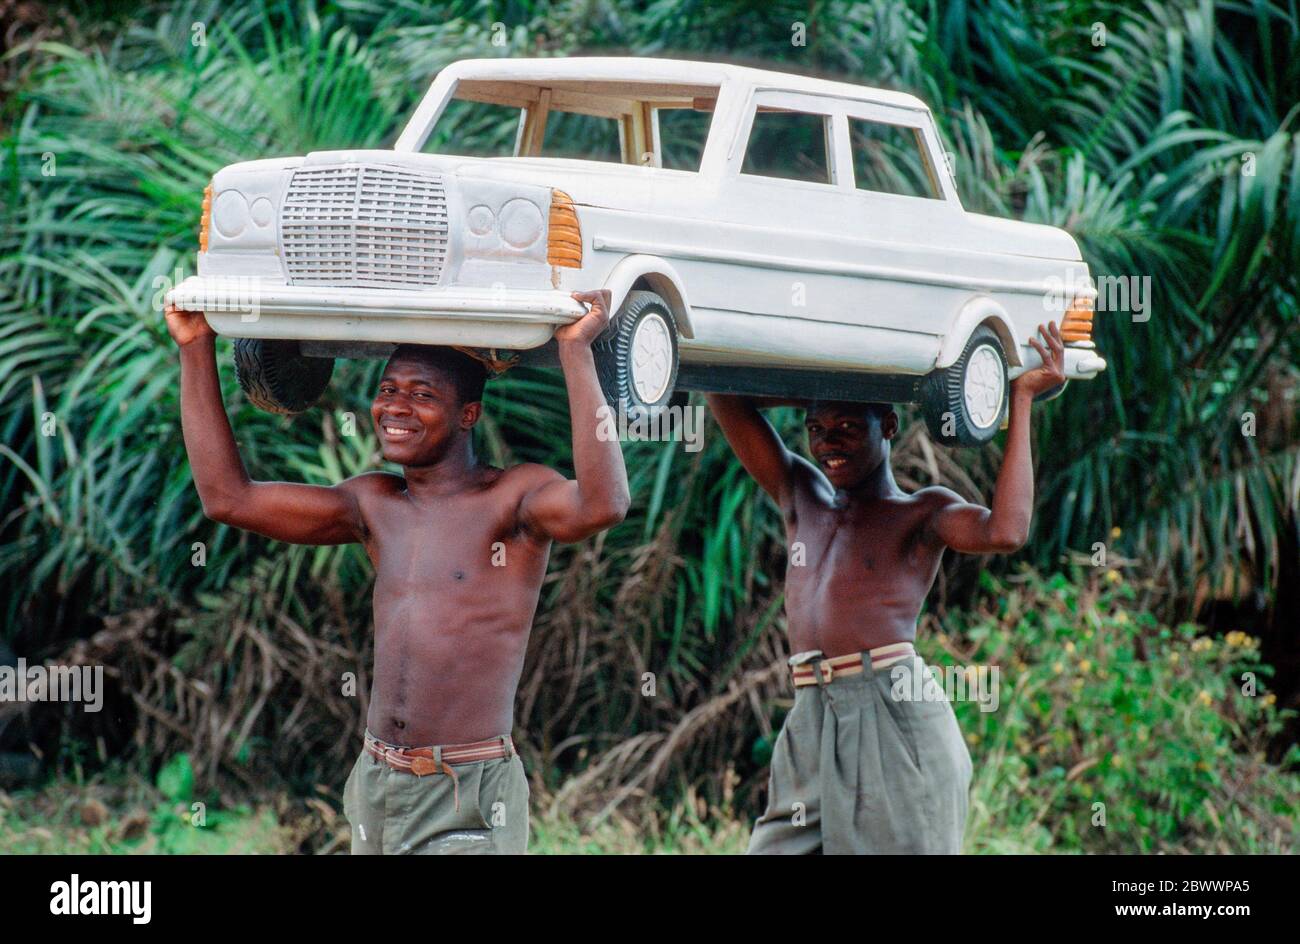 Ghana, Accra: Mercedes auto come bara per i clienti ricchi --- Mercedes Auto als kunstvoll verzierter Sarg fuer wohlhabende Kunden Foto Stock